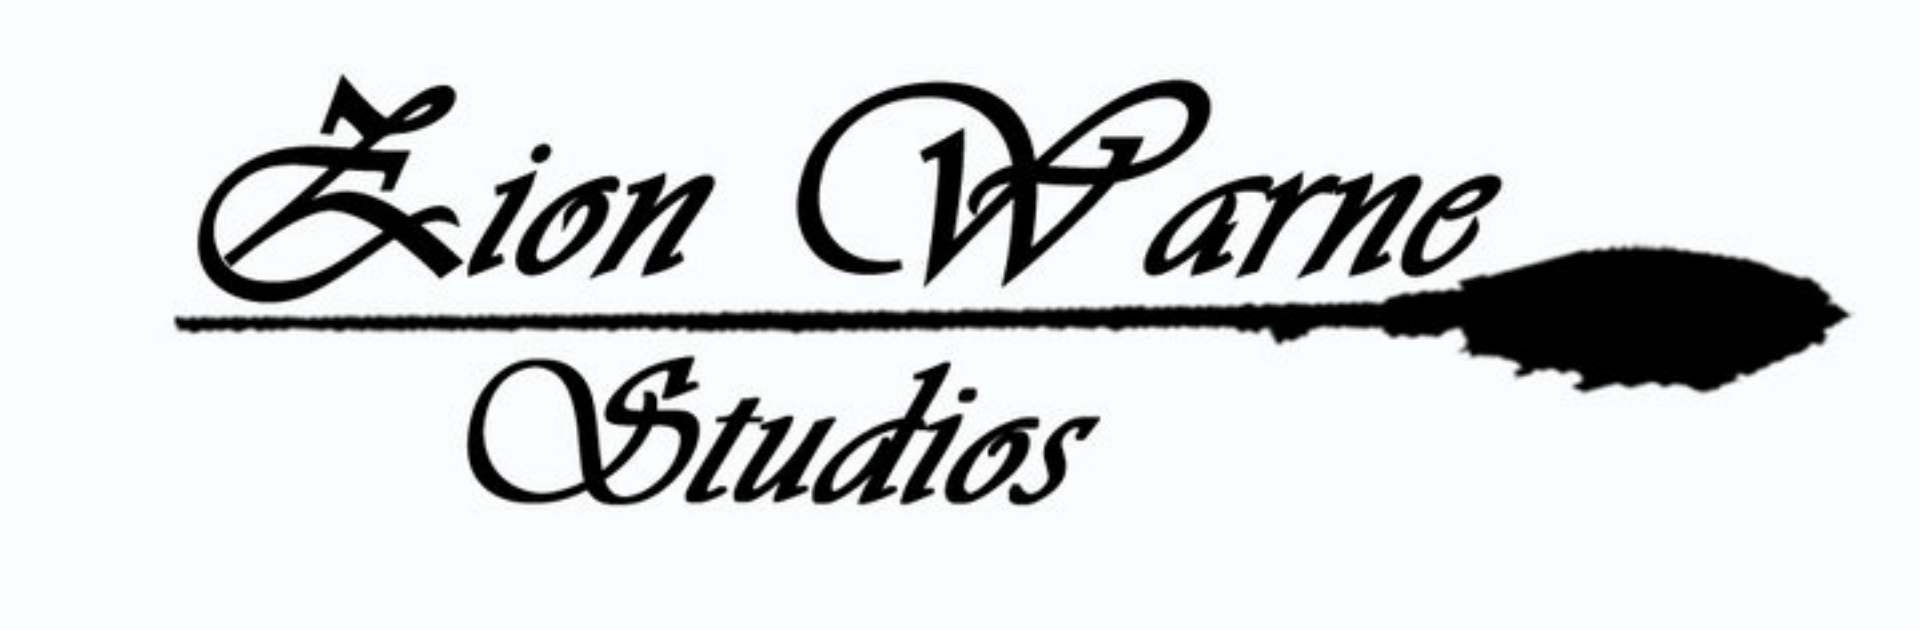 Zion Warne Studios